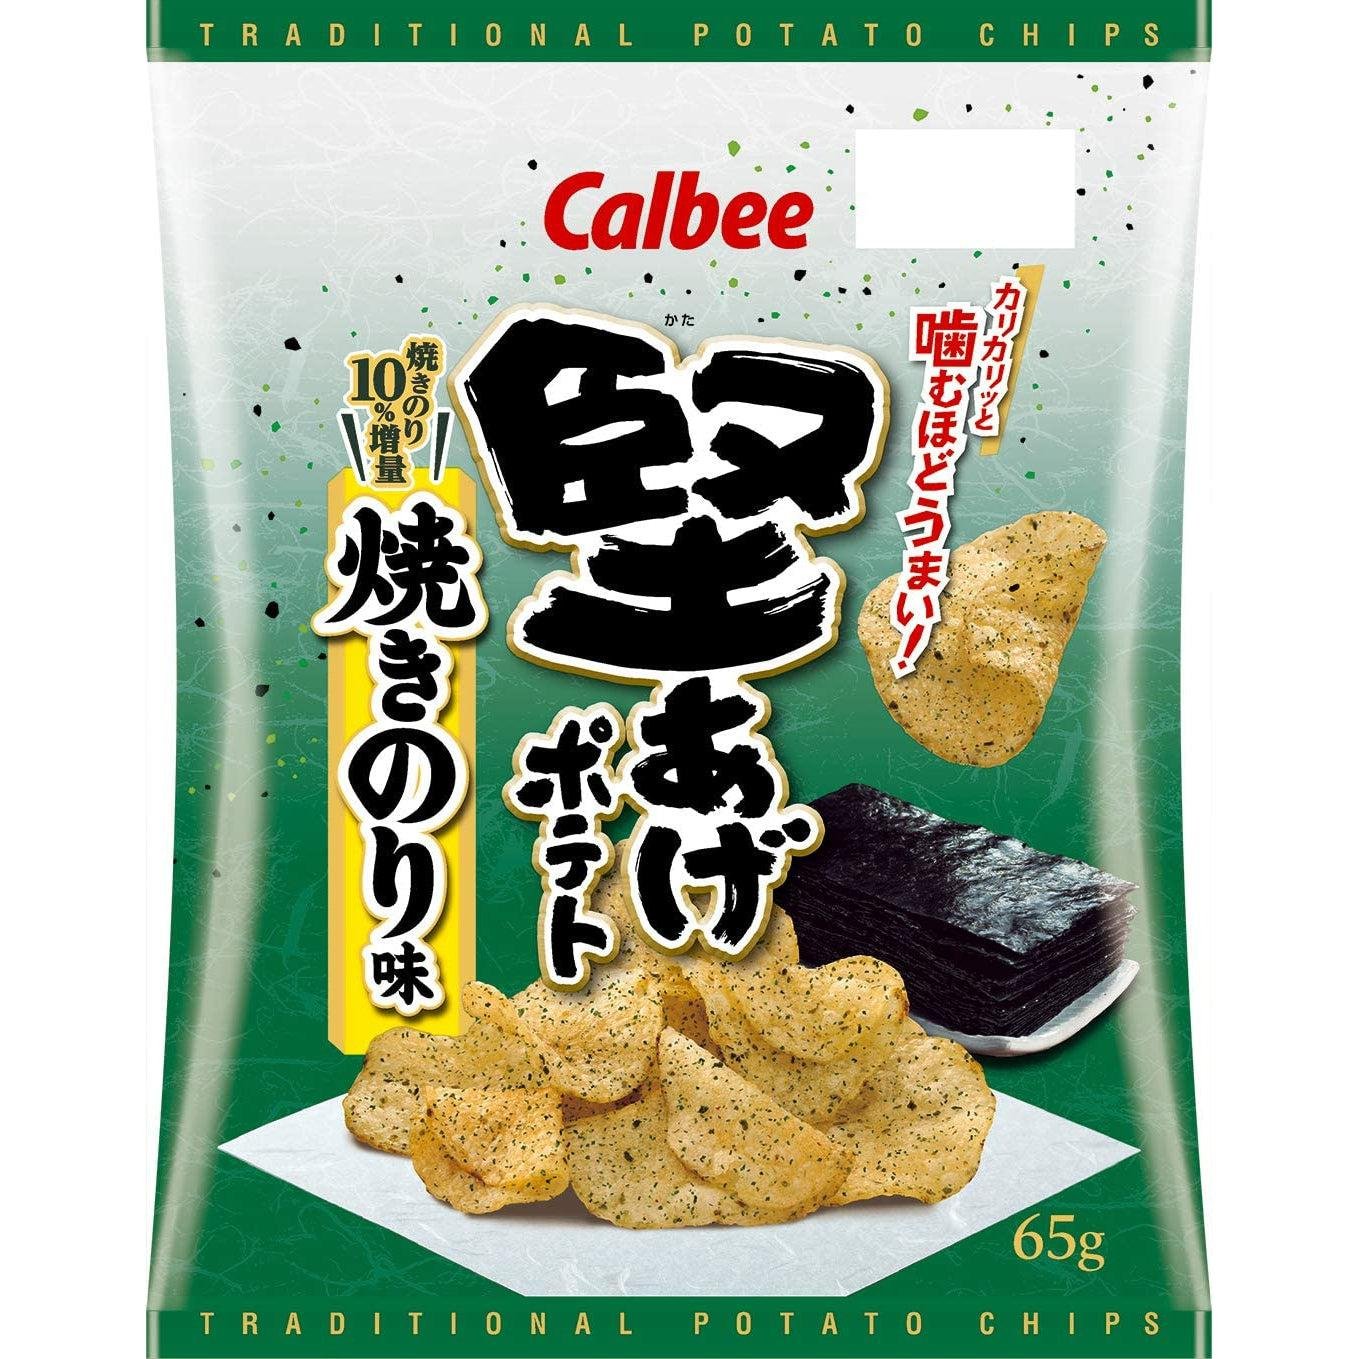 P-1-CALB-KTGNRI-1:12-Calbee Kataage Nori Seaweed Crispy Potato Chips 65g (Box of 12).jpg